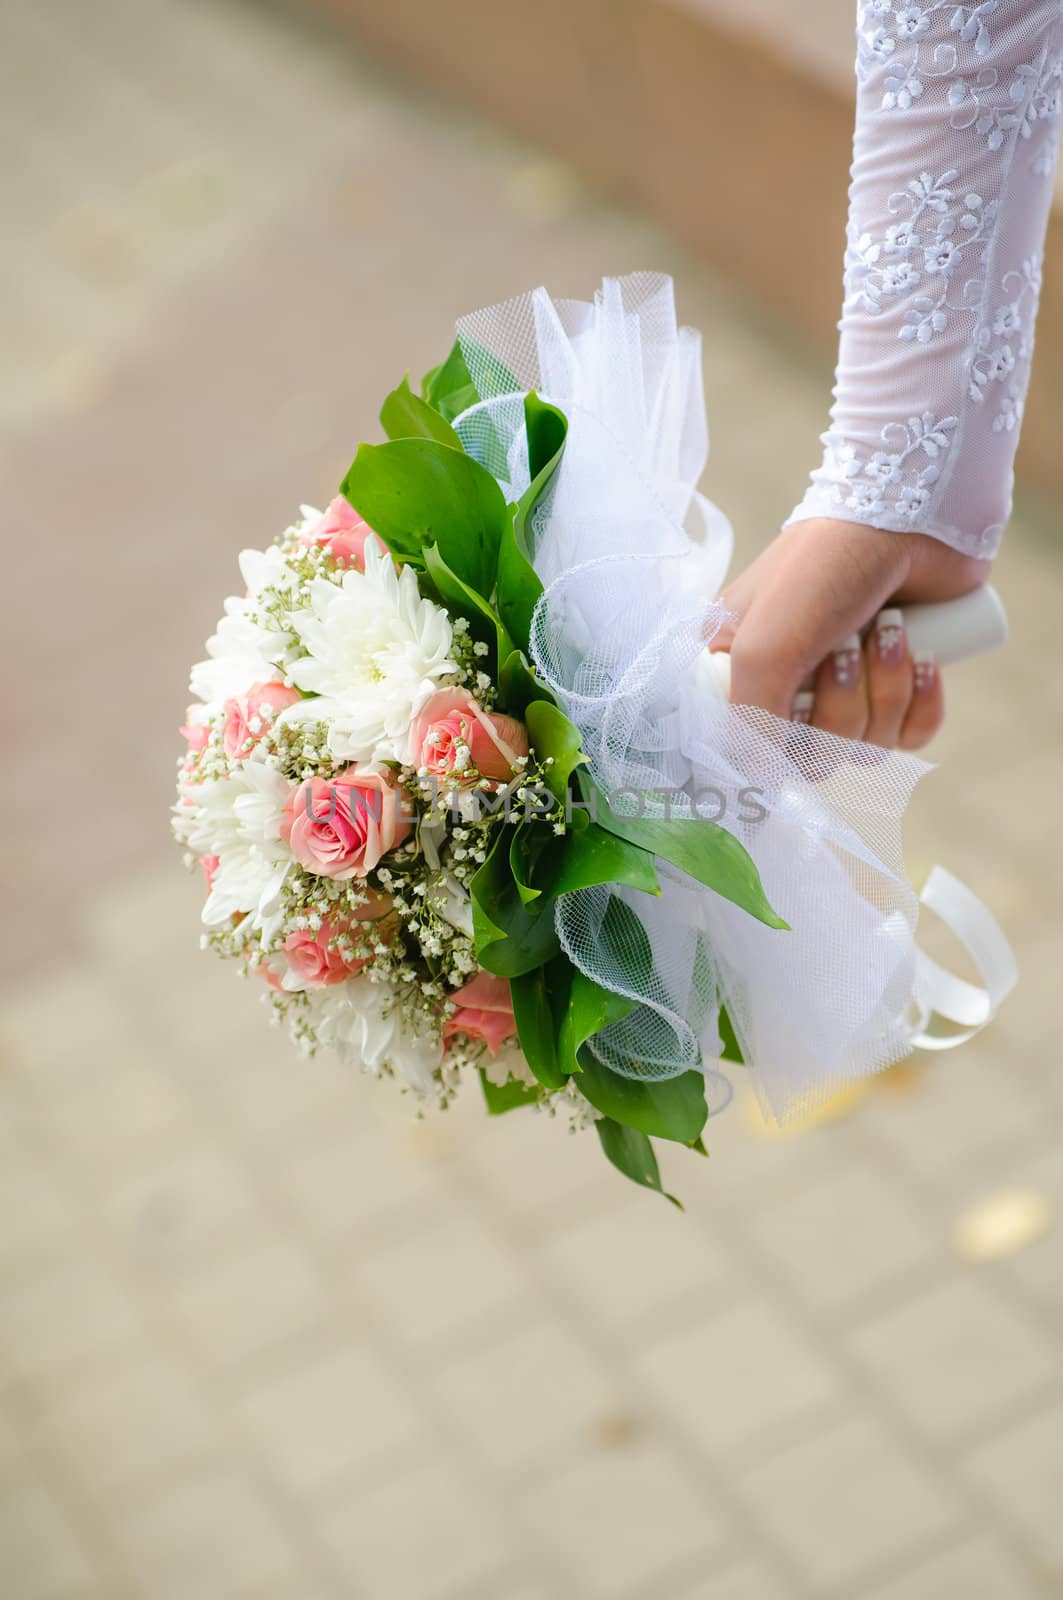 Wedding bouquet in hands of the bride. Blur background. 